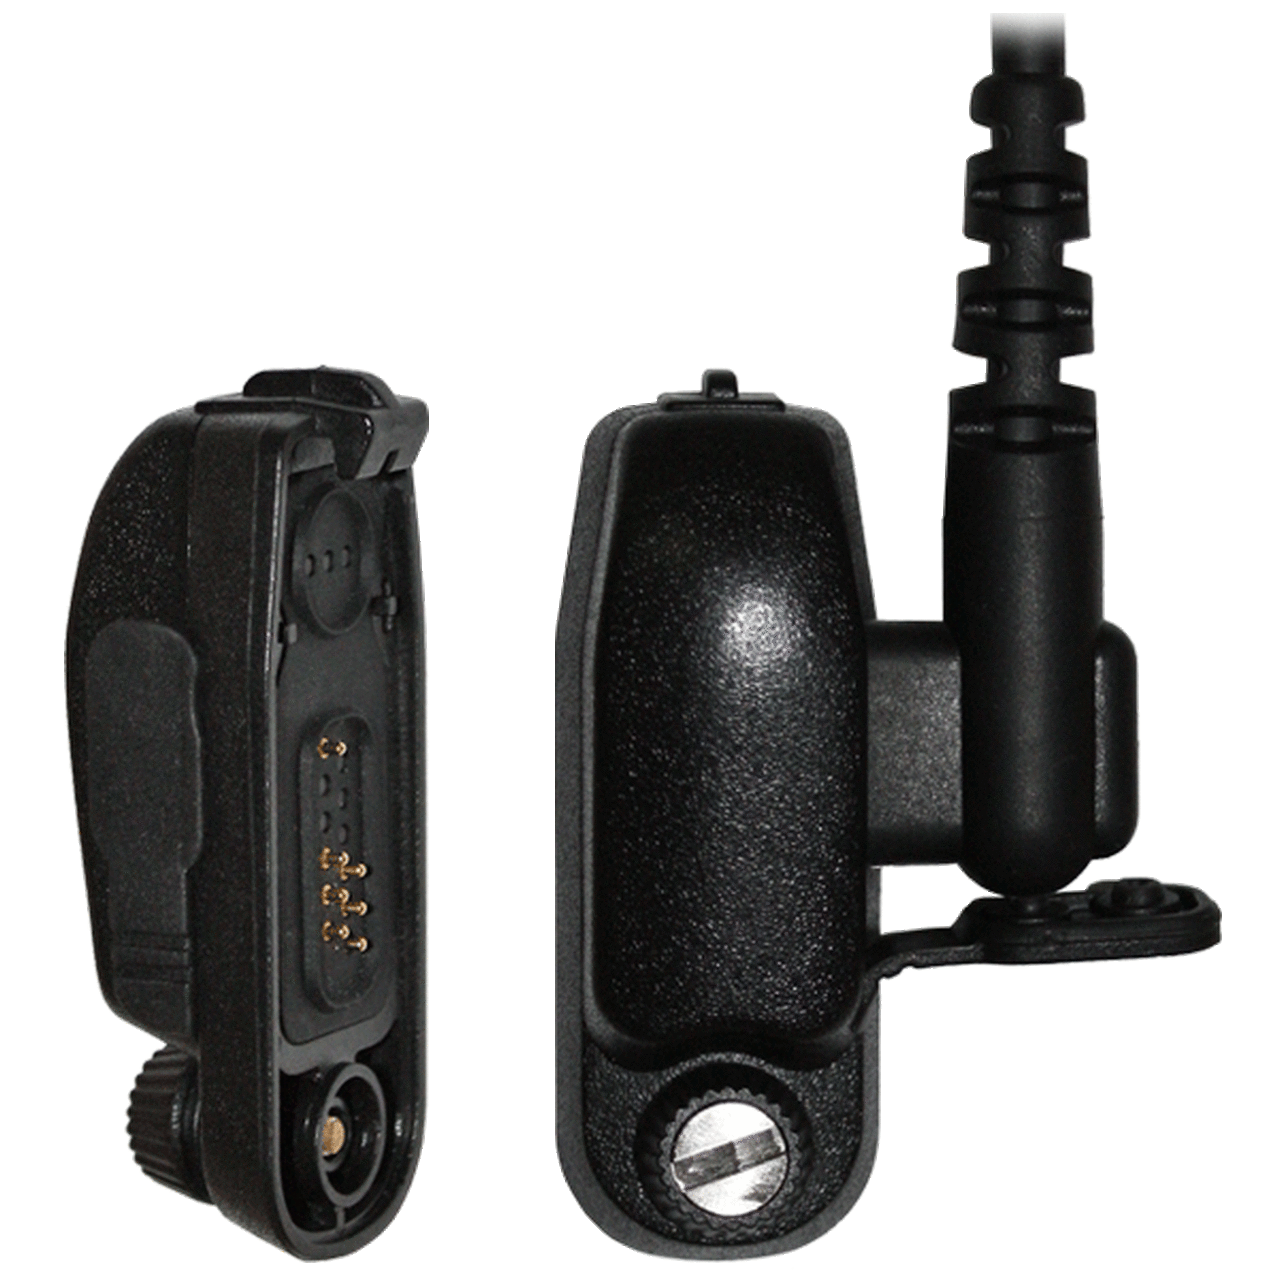 Audio Adapter for Motorola M7 TRBO series radios - M7 [[product_type]] kleinelectronics.com 50.95